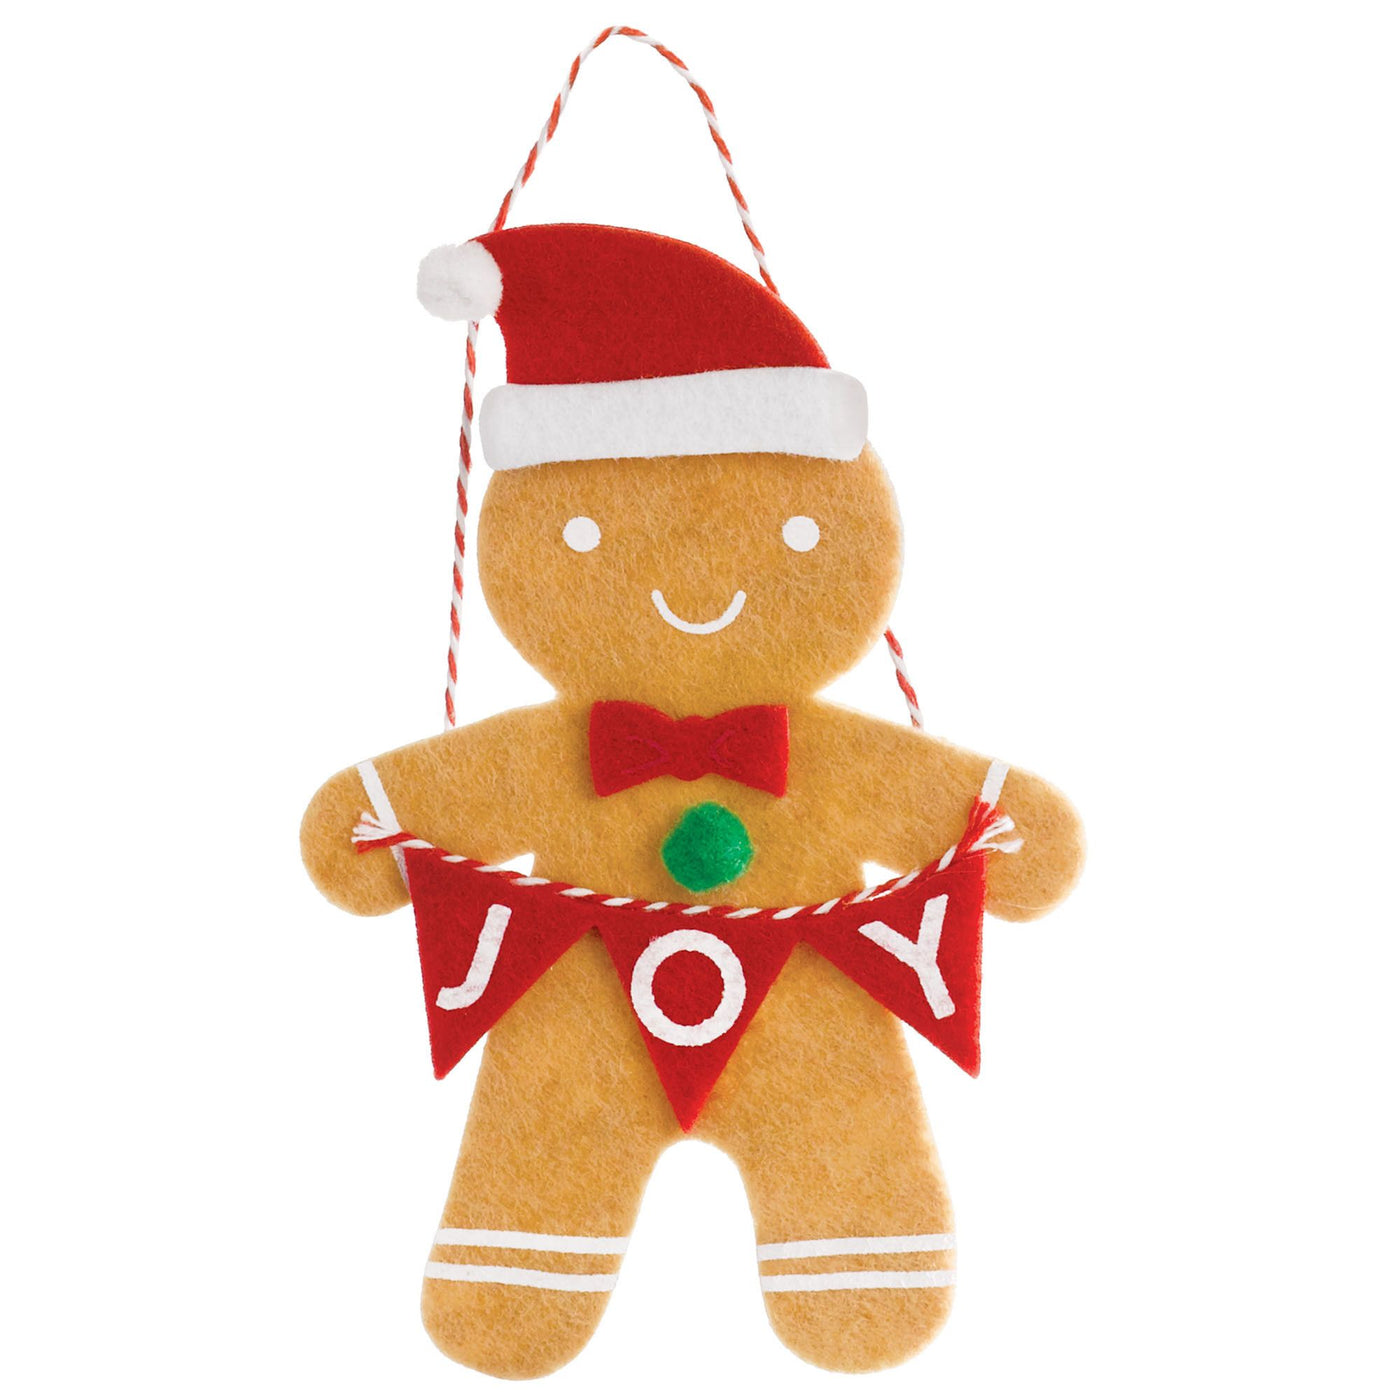 Felt Christmas Tree Ornament - Gingerbread Man